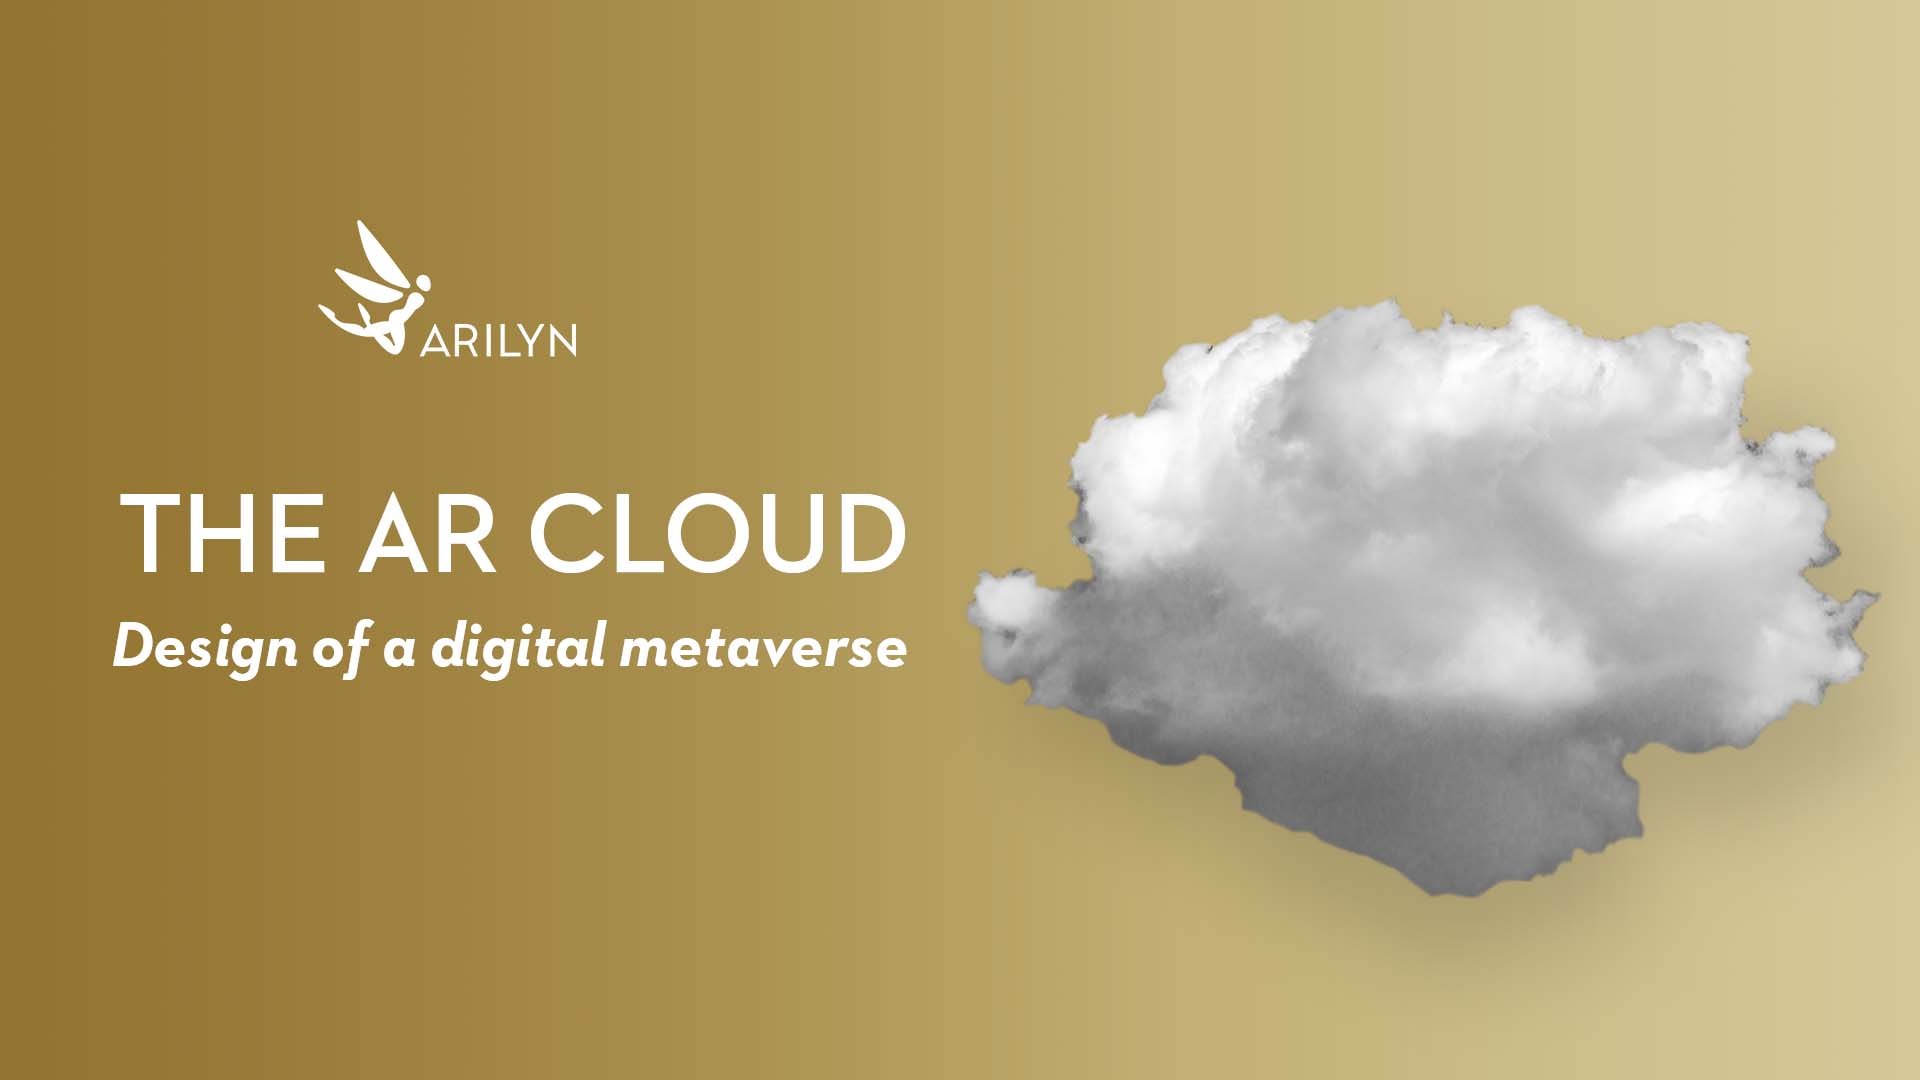 The intelligent design of a digital metaverse – The AR Cloud